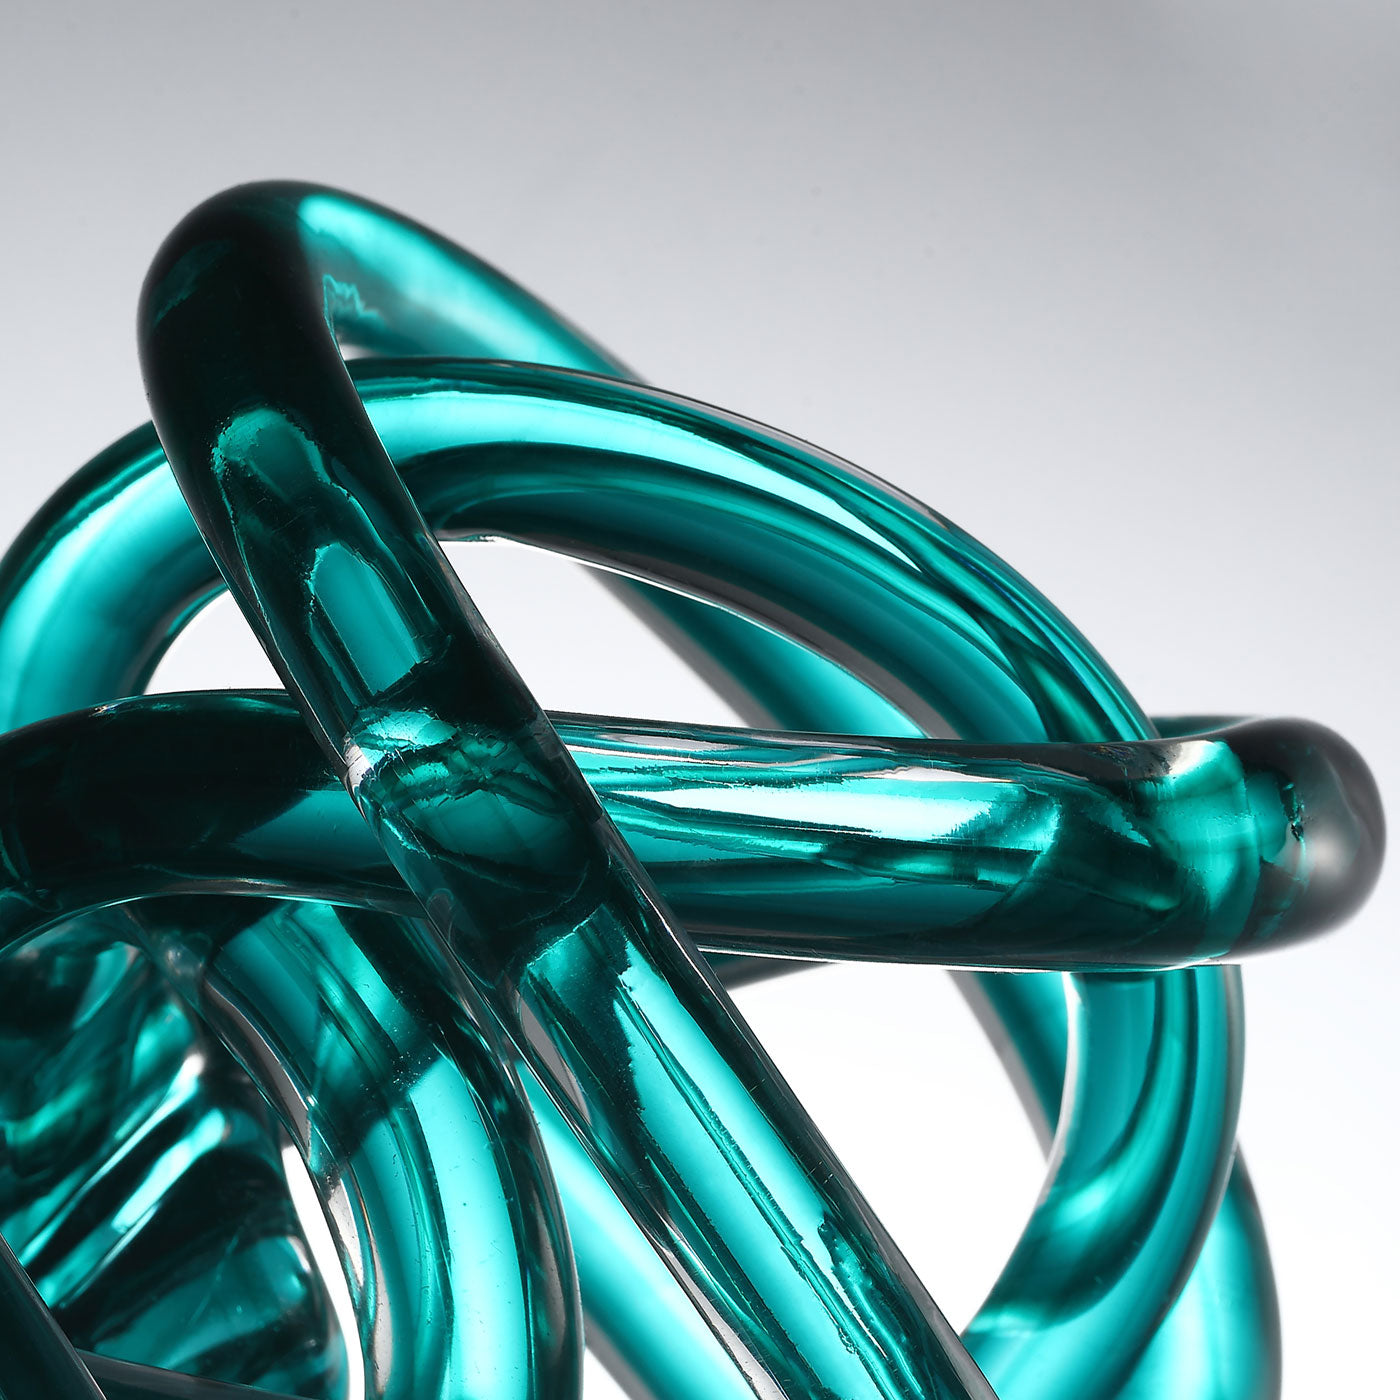 Hand Blown Infinity Knot Sommerso Art Orbit Glass Ball 4-8 inch tall